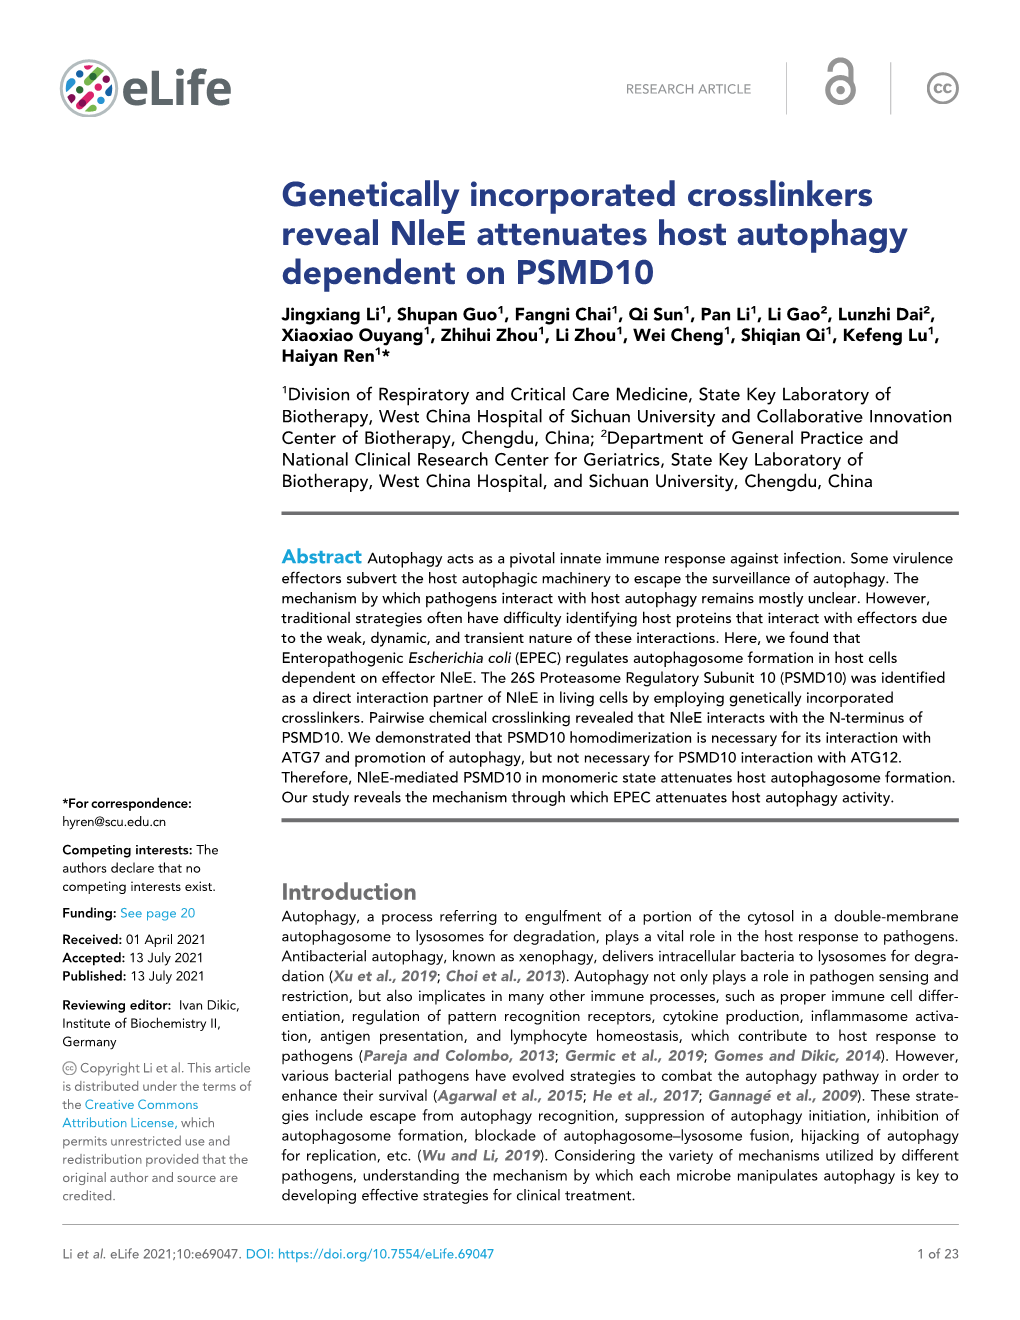 Genetically Incorporated Crosslinkers Reveal Nlee Attenuates Host